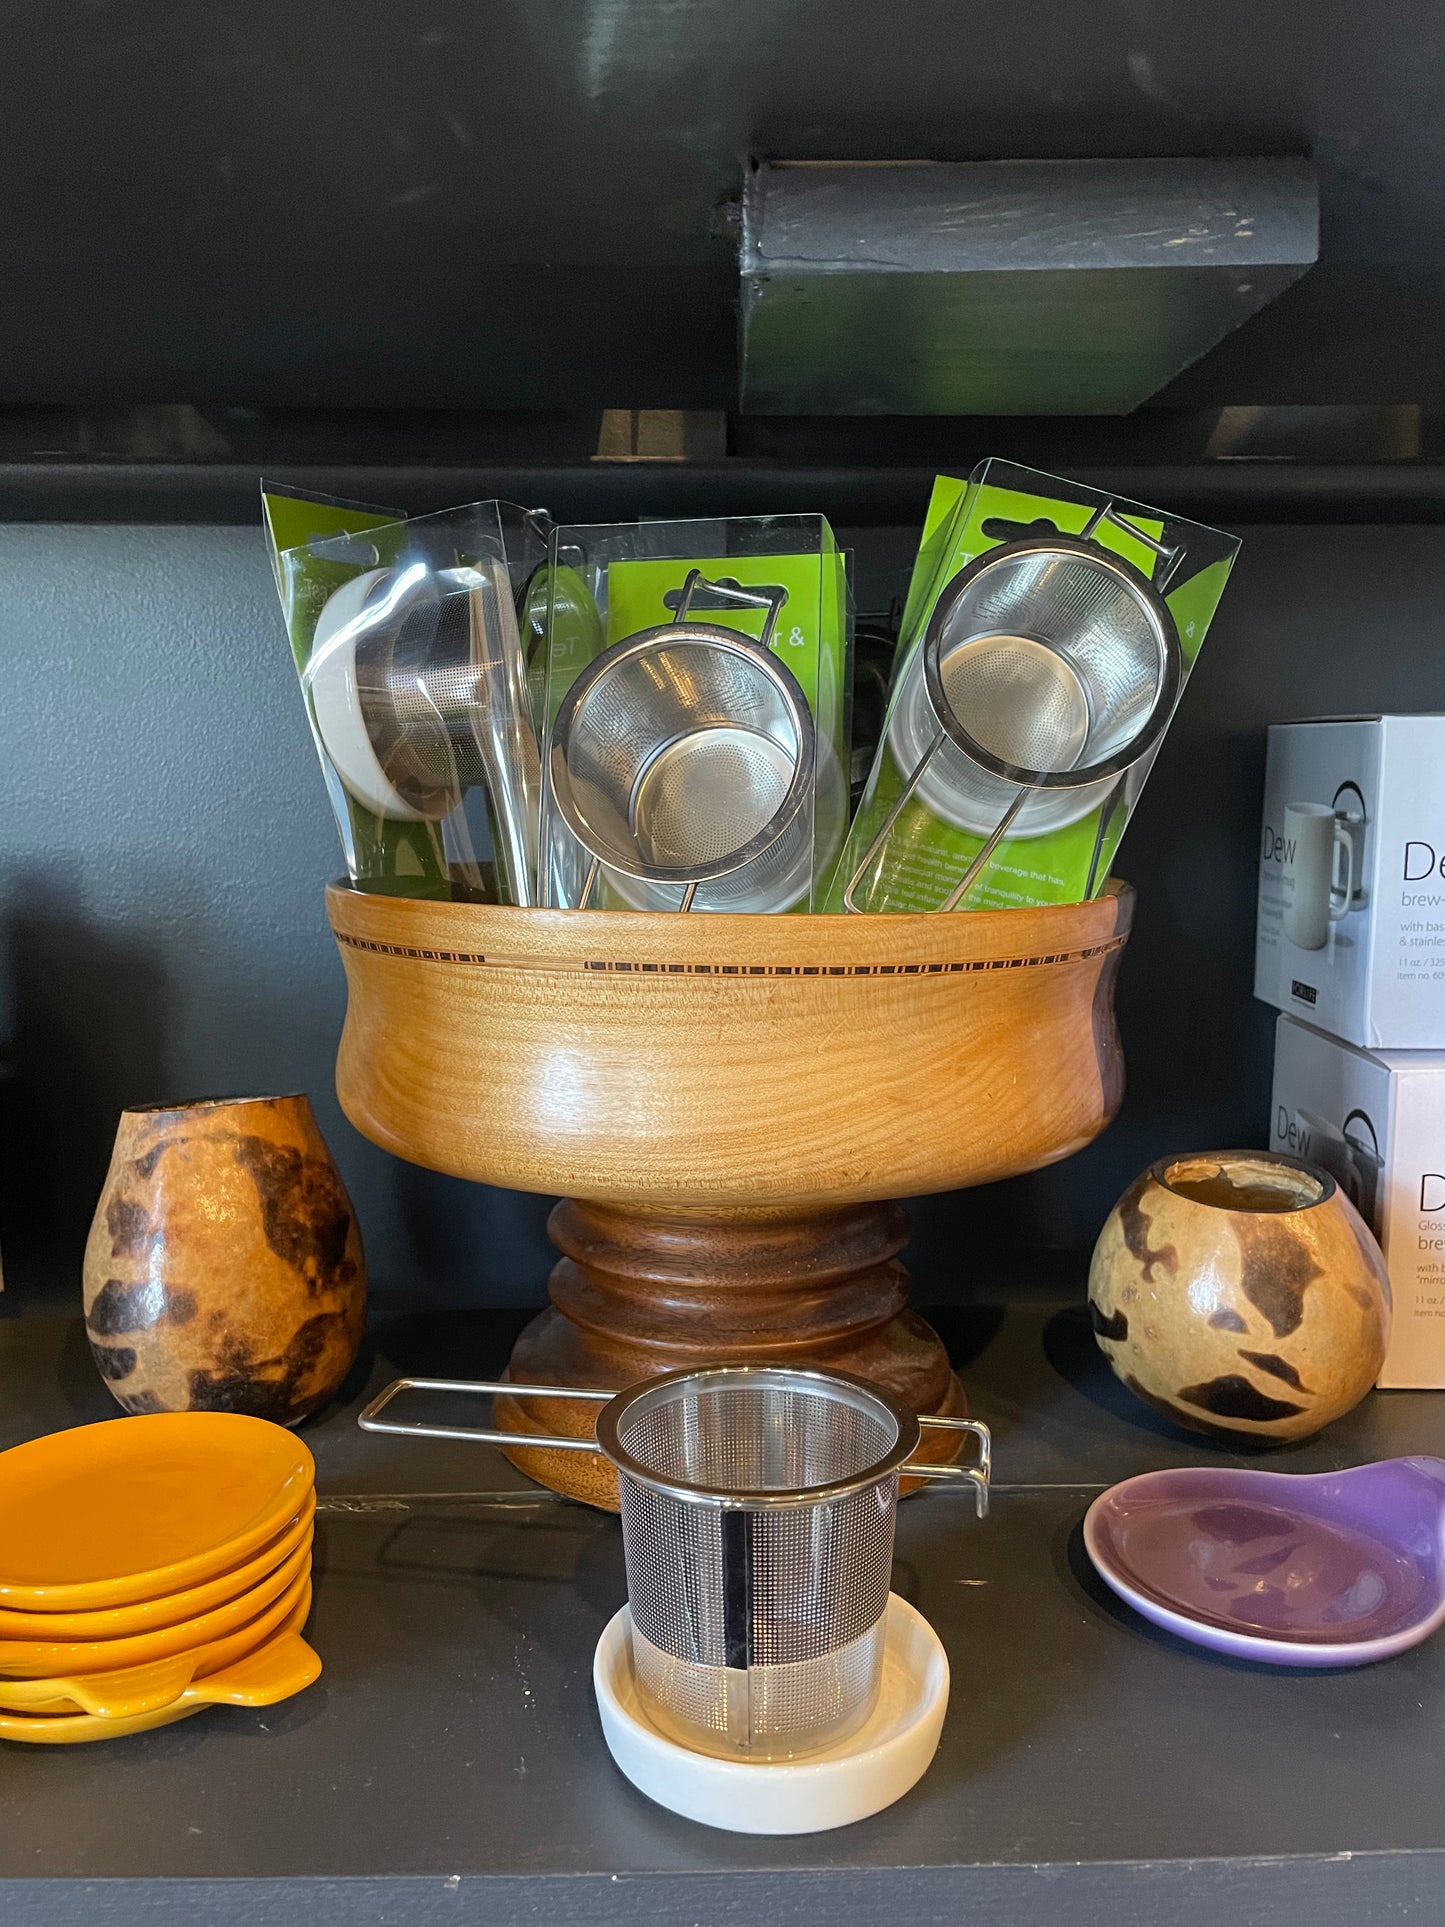 Extra-fine Tea Strainer & Dish Set